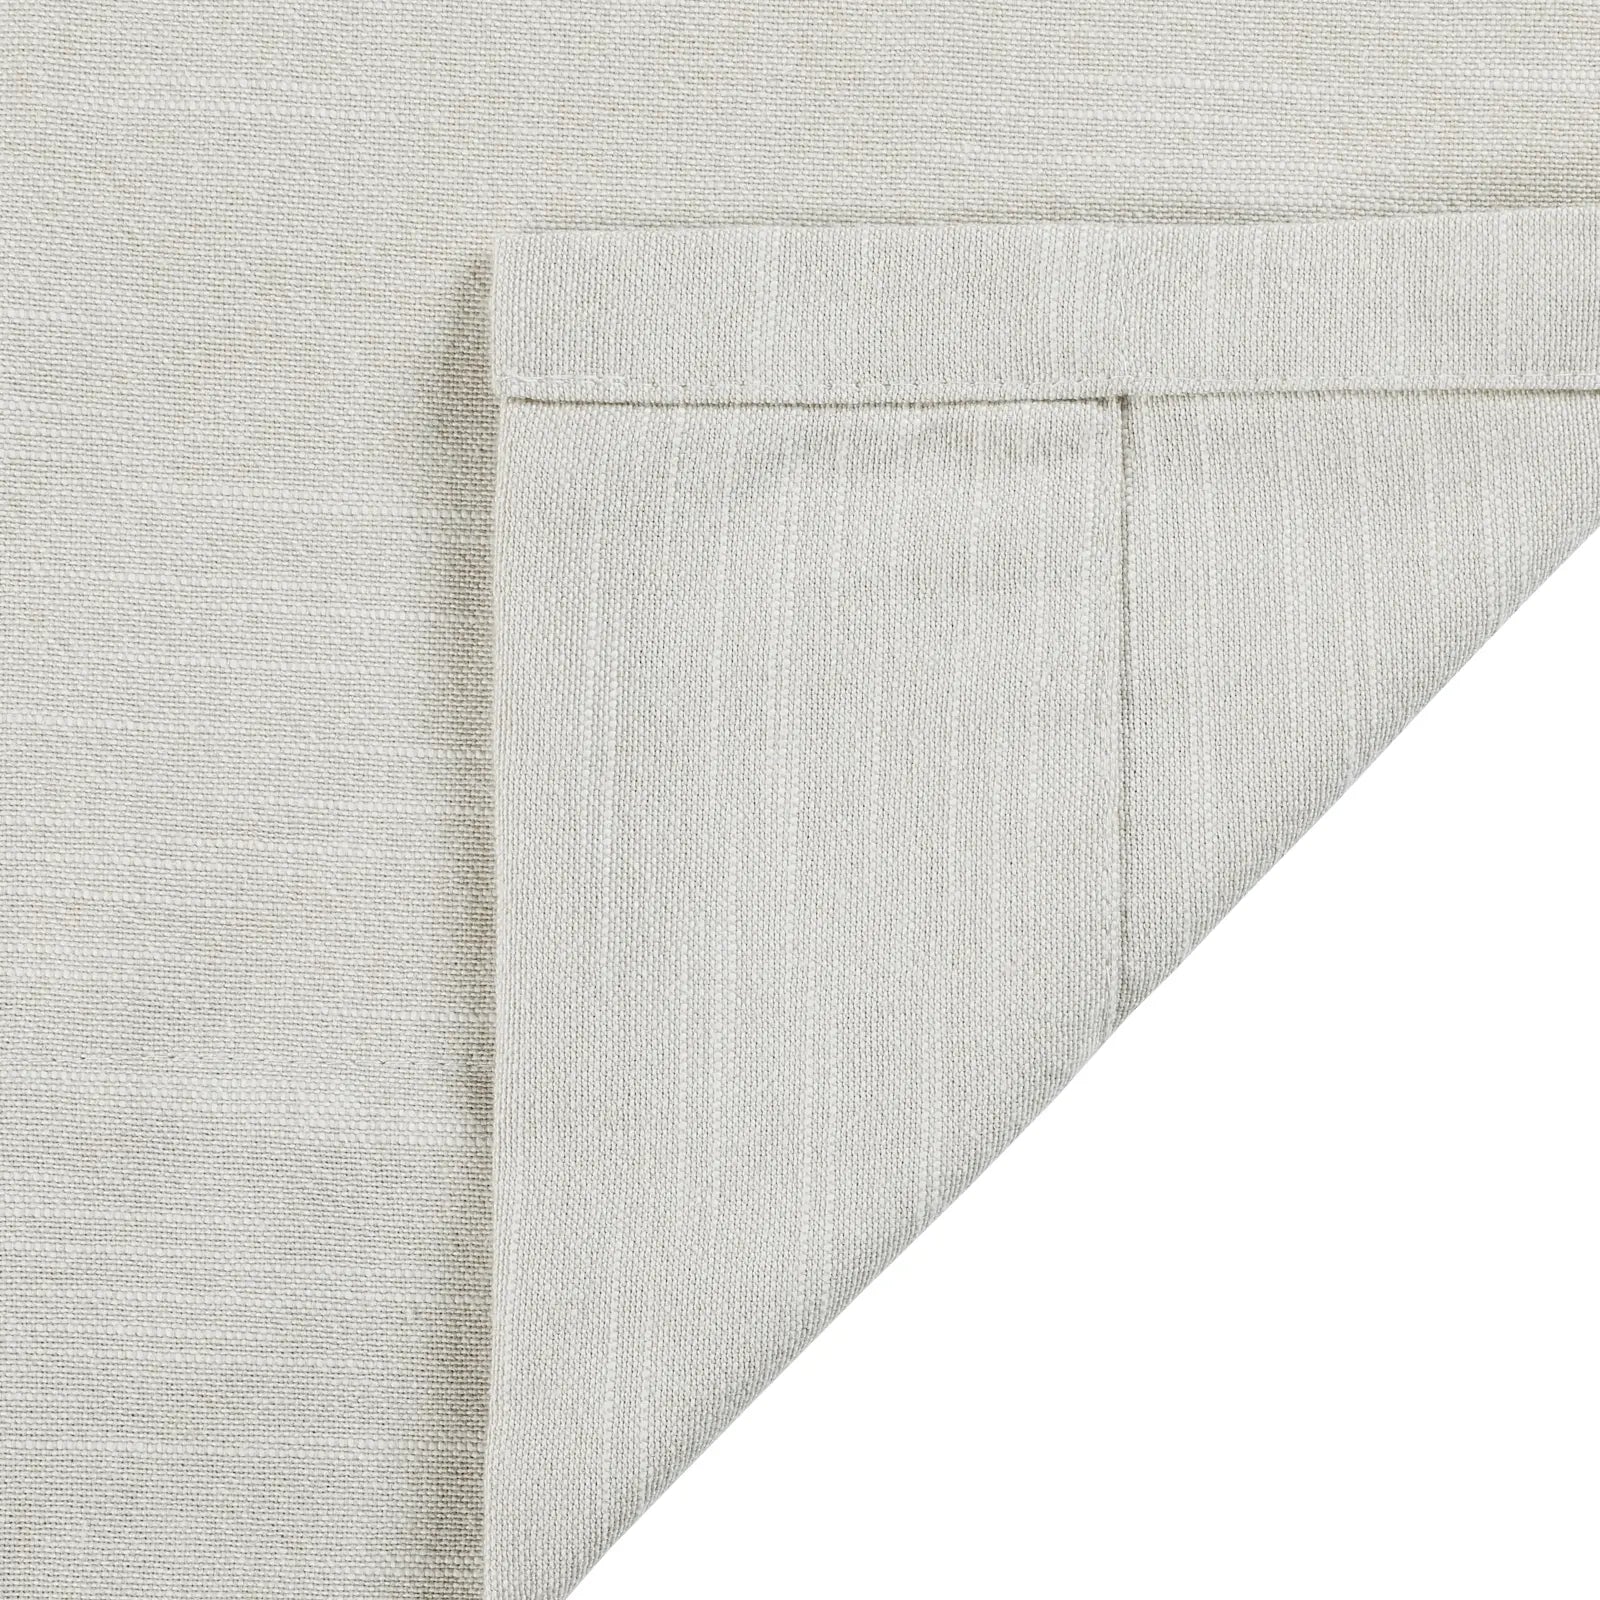 Aira Premium Linen Cotton Curtain Pleated